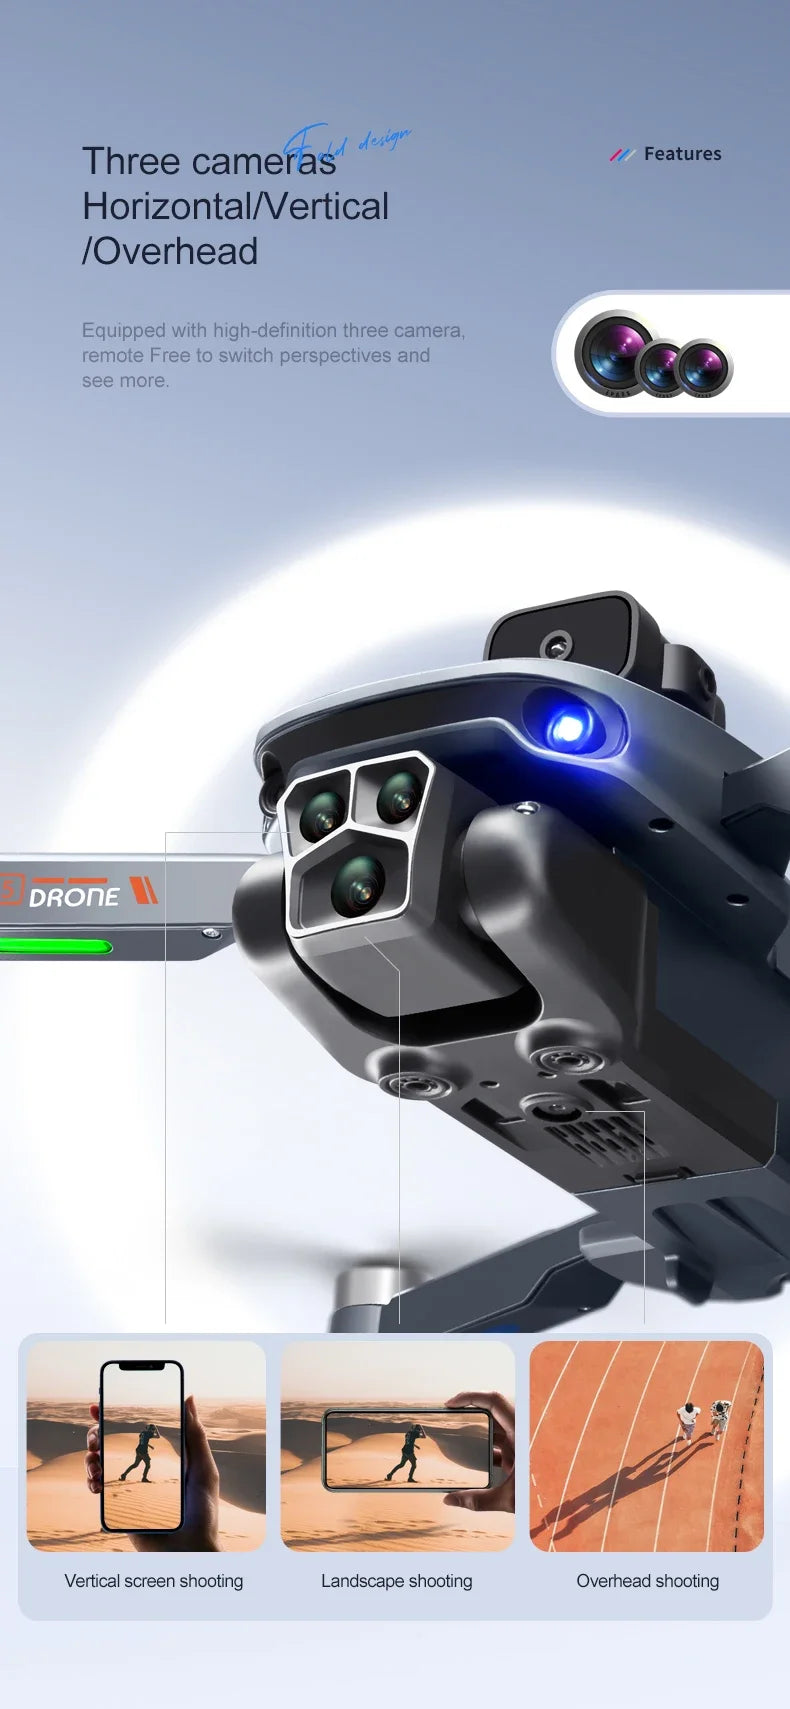 S115 Drone, desigr three cameras features horizontalnertical ioverhead